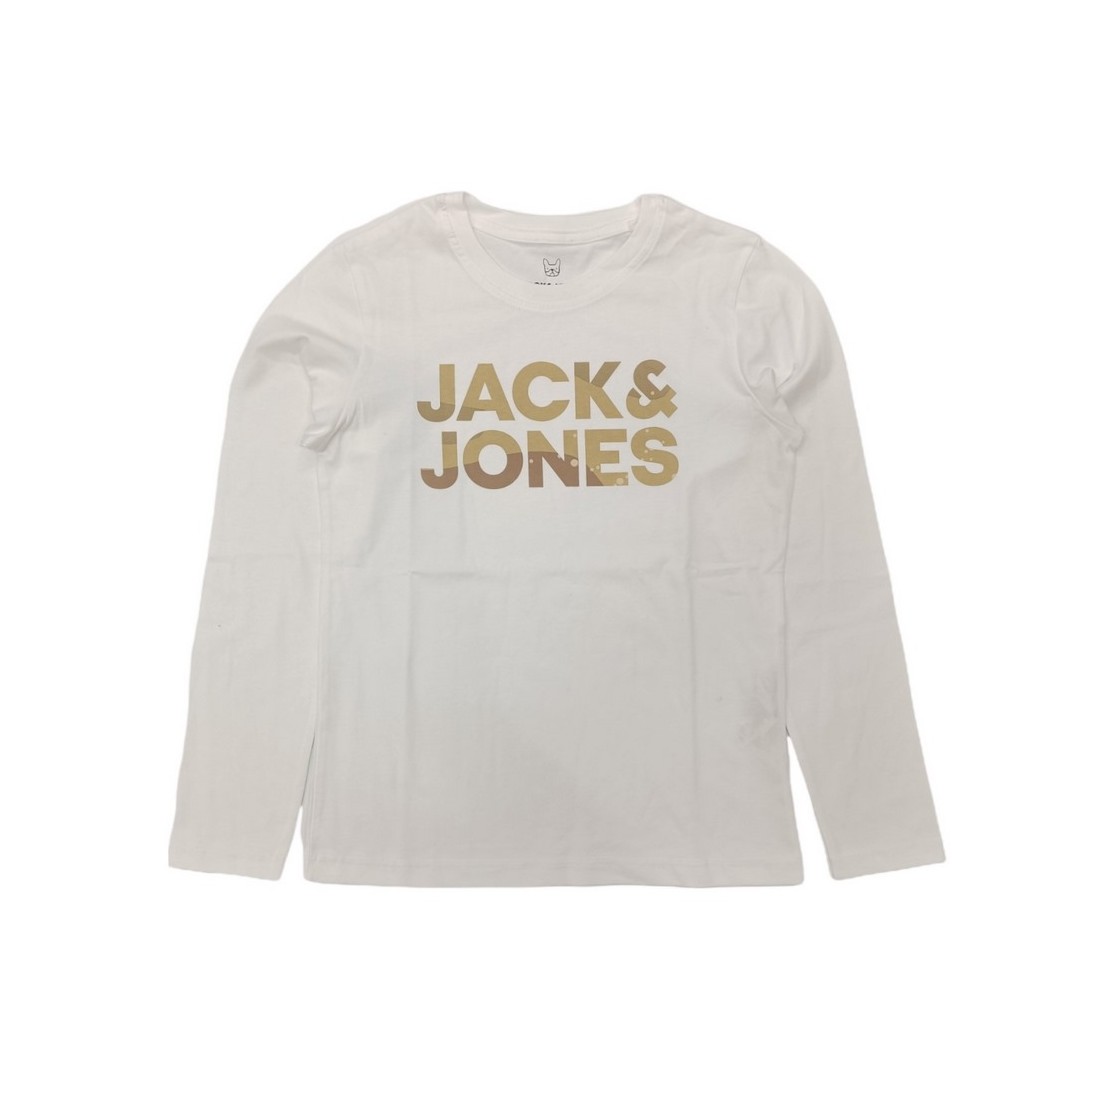 Jack & jones - Maglia bianca jcodolan tee